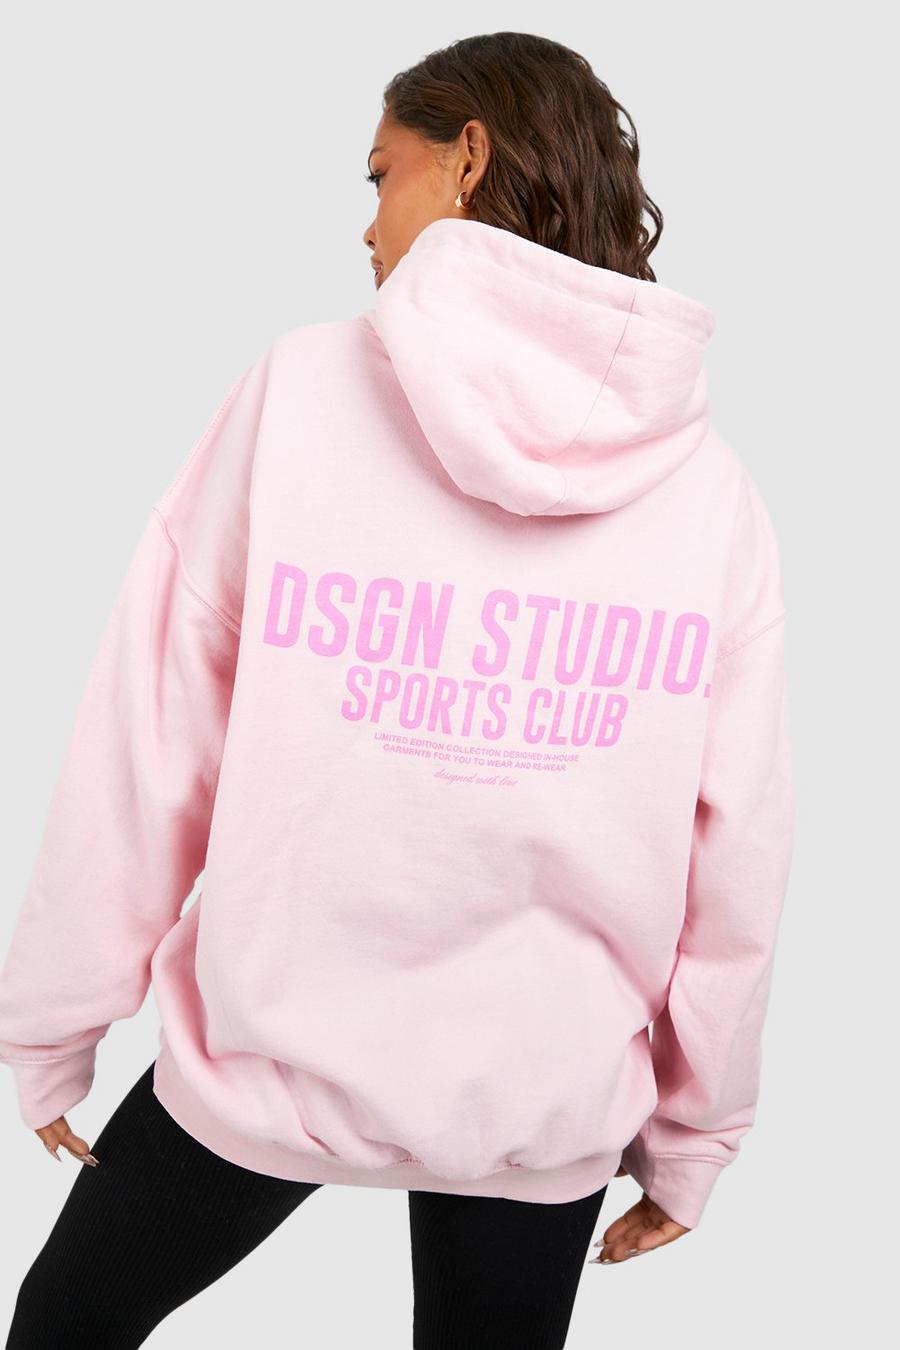 Sudadera oversize con capucha y eslogan Dsgn Studio Sports Club, Light pink